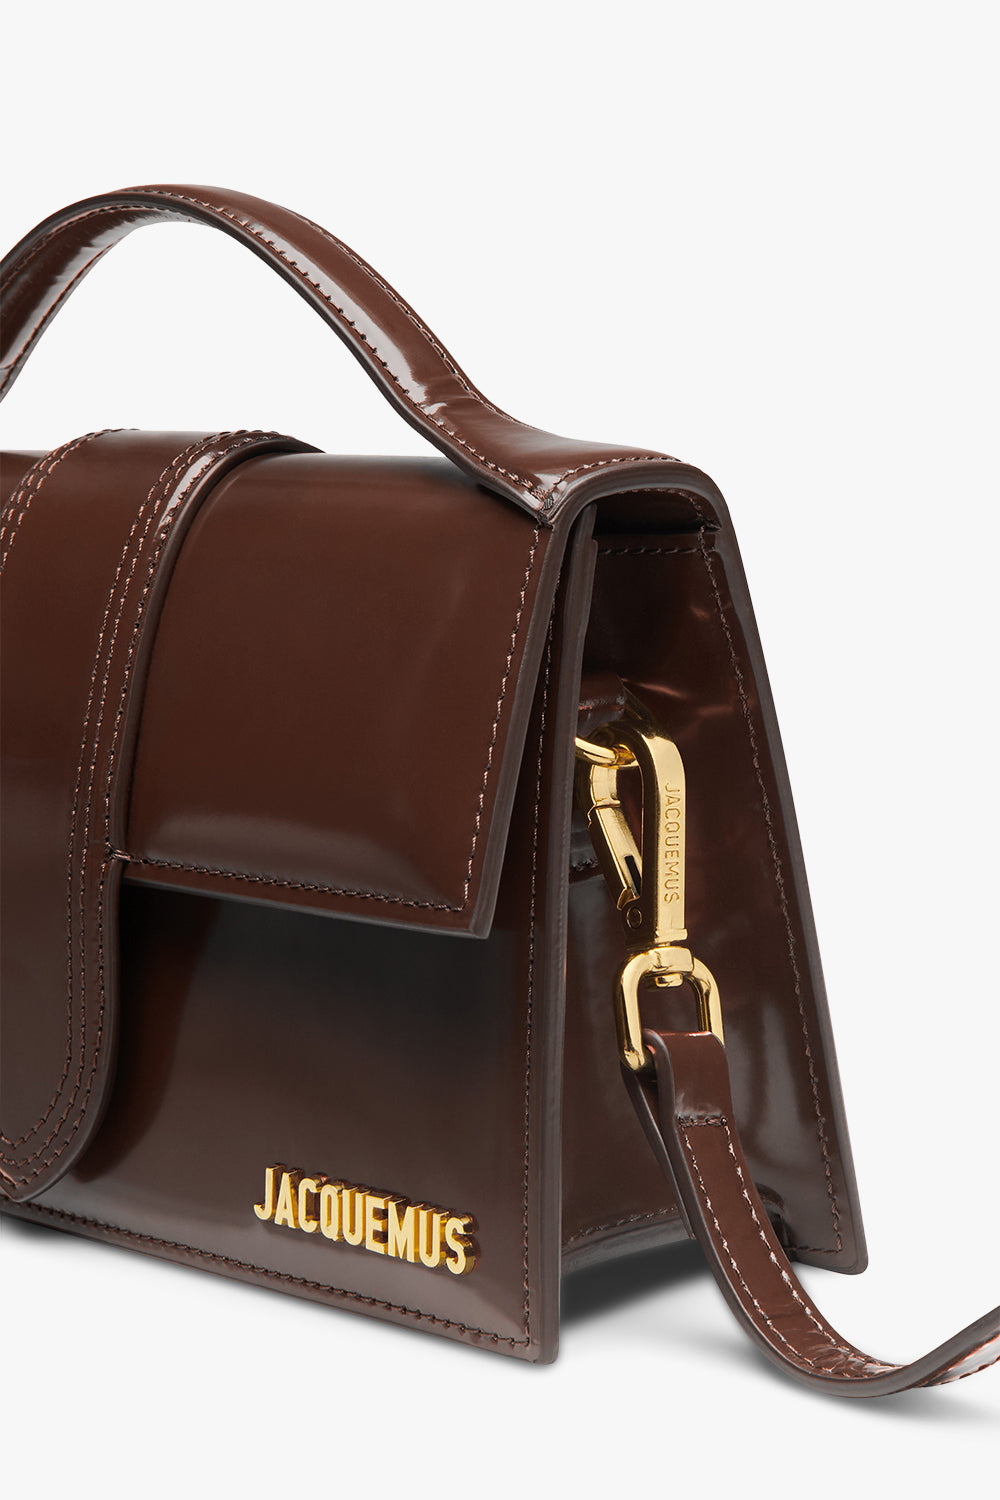 JACQUEMUS Bags BROWN / MIDNIGHT BROWN LE GRAND BAMBINO BAG | SHINY BROWN